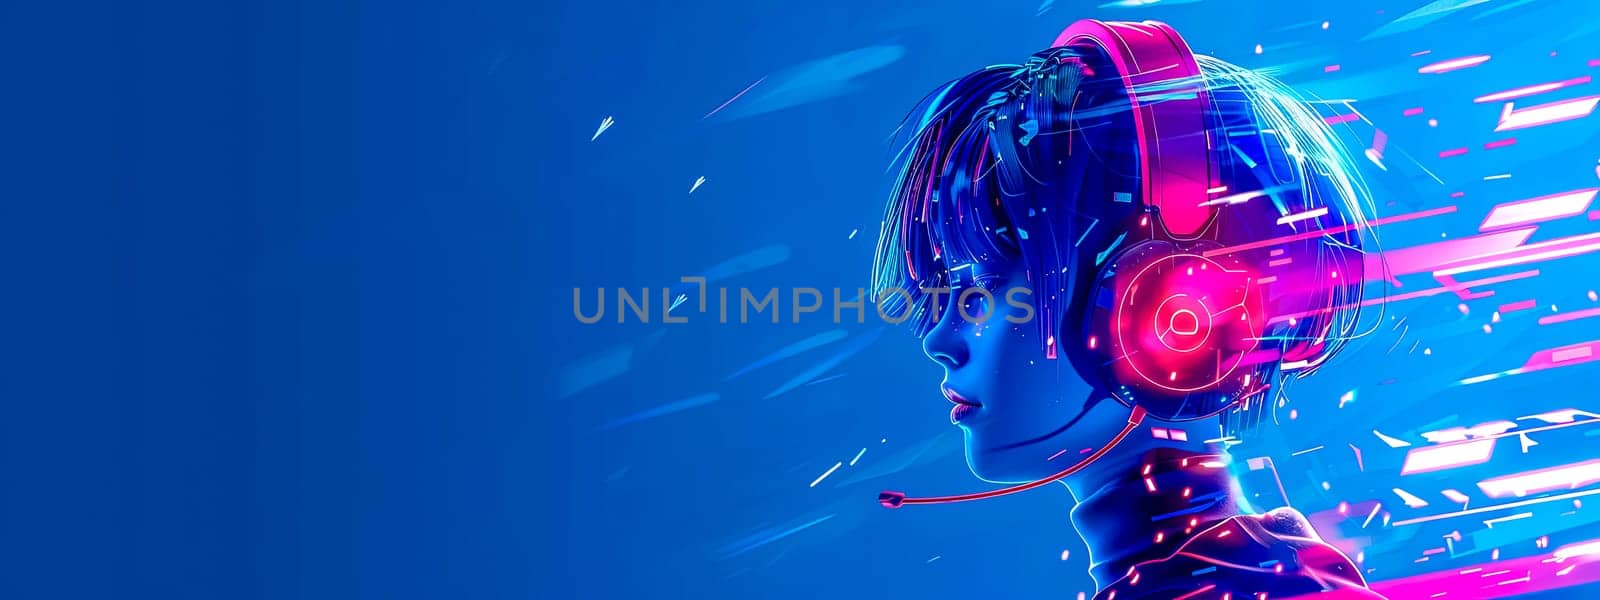 Cyberpunk gamer girl with neon lights by Edophoto